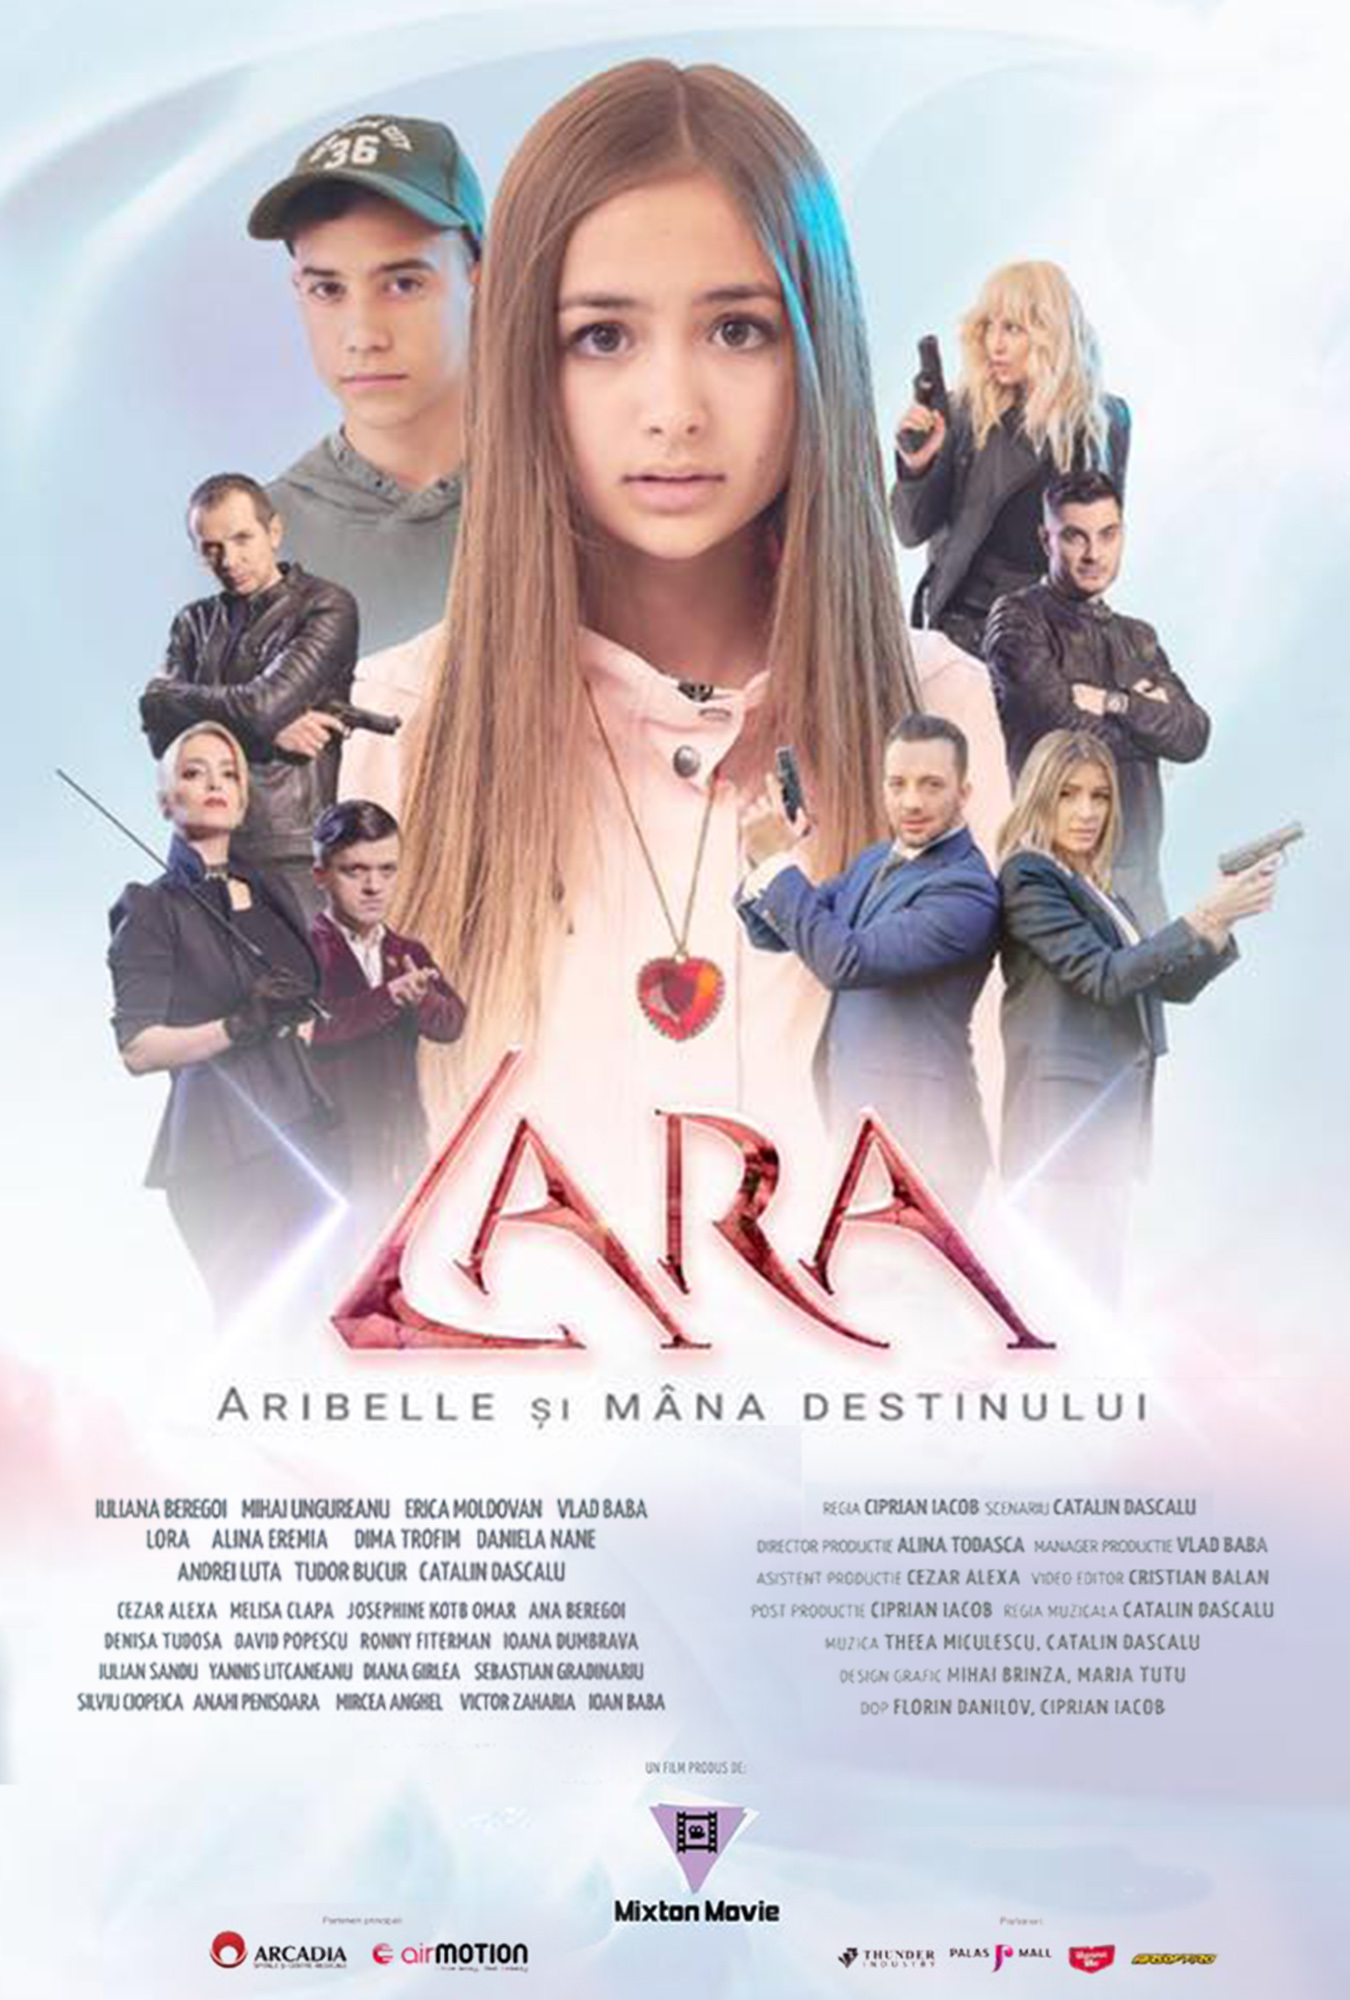 Lara - Aribelle si mana destinului (2018) постер